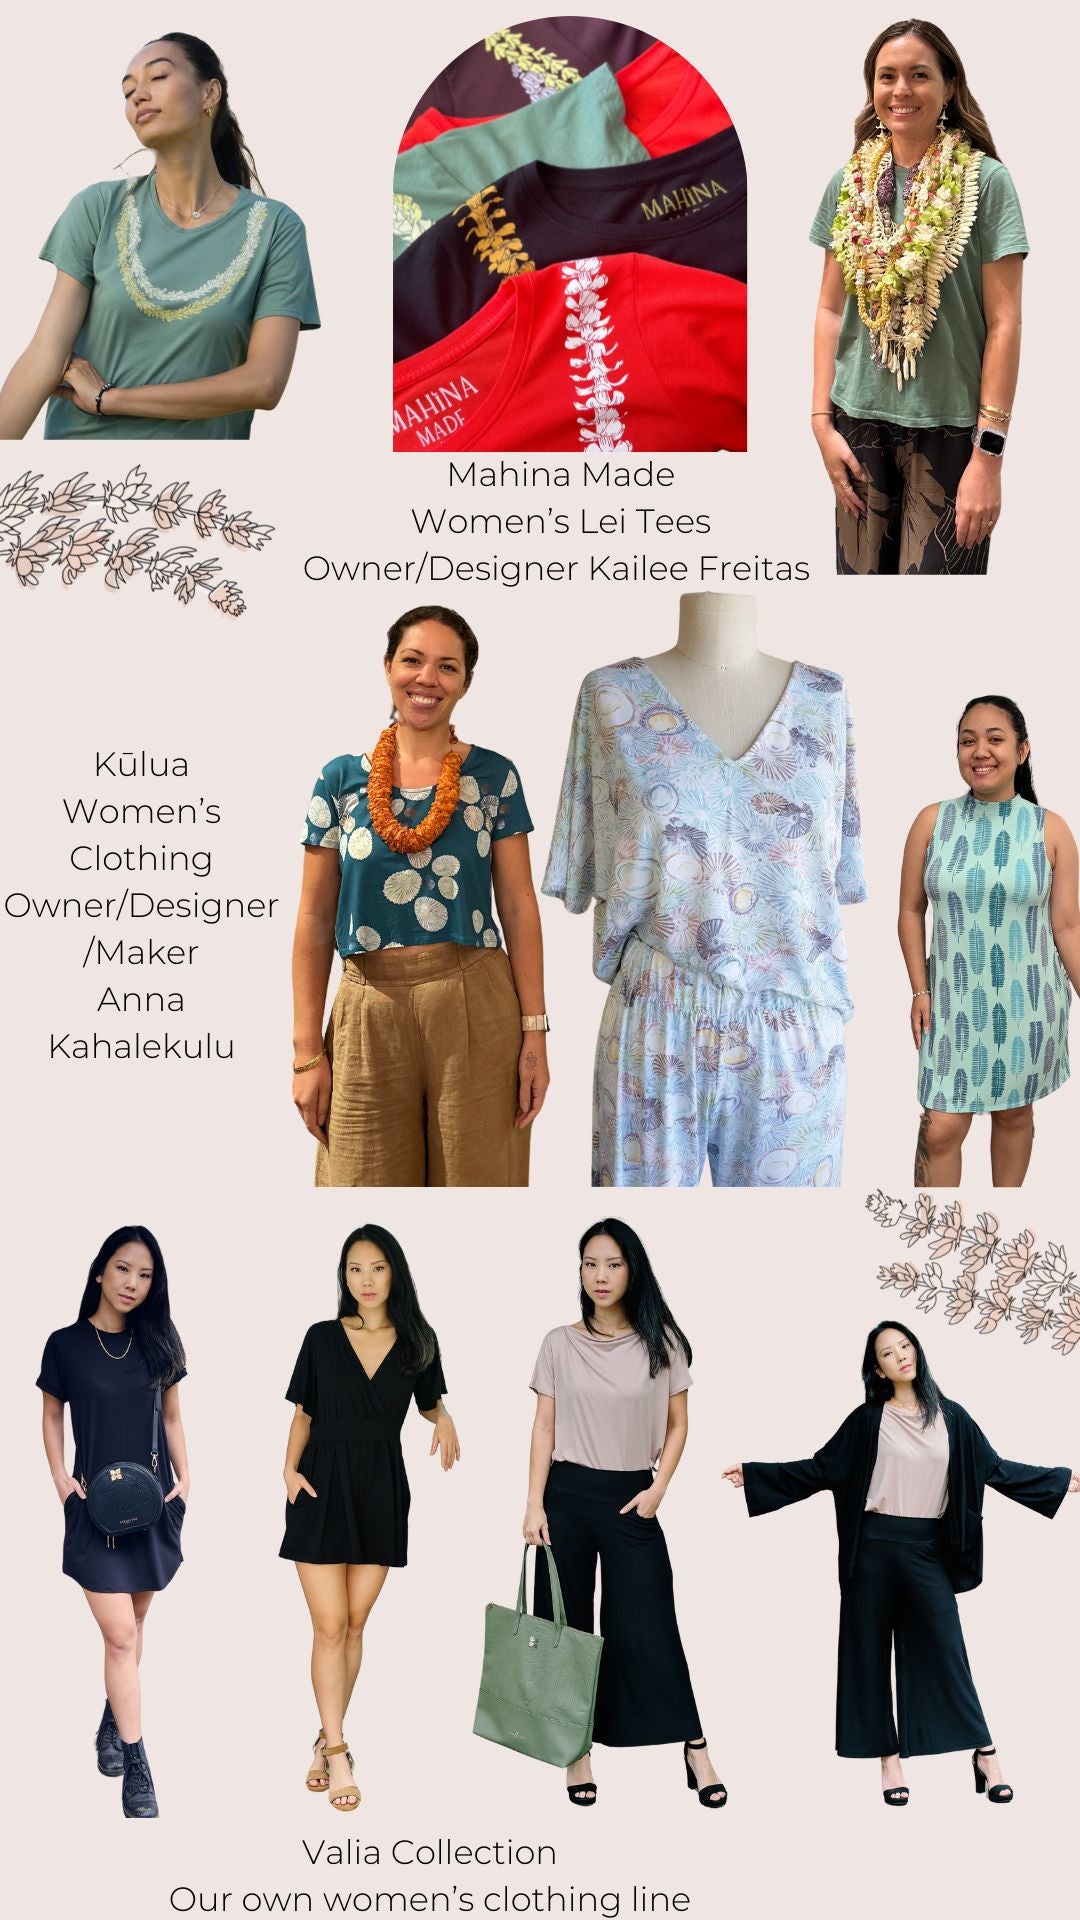 Hawaii Clothing Brands Mahina Made, Kulua and Valia Honolulu